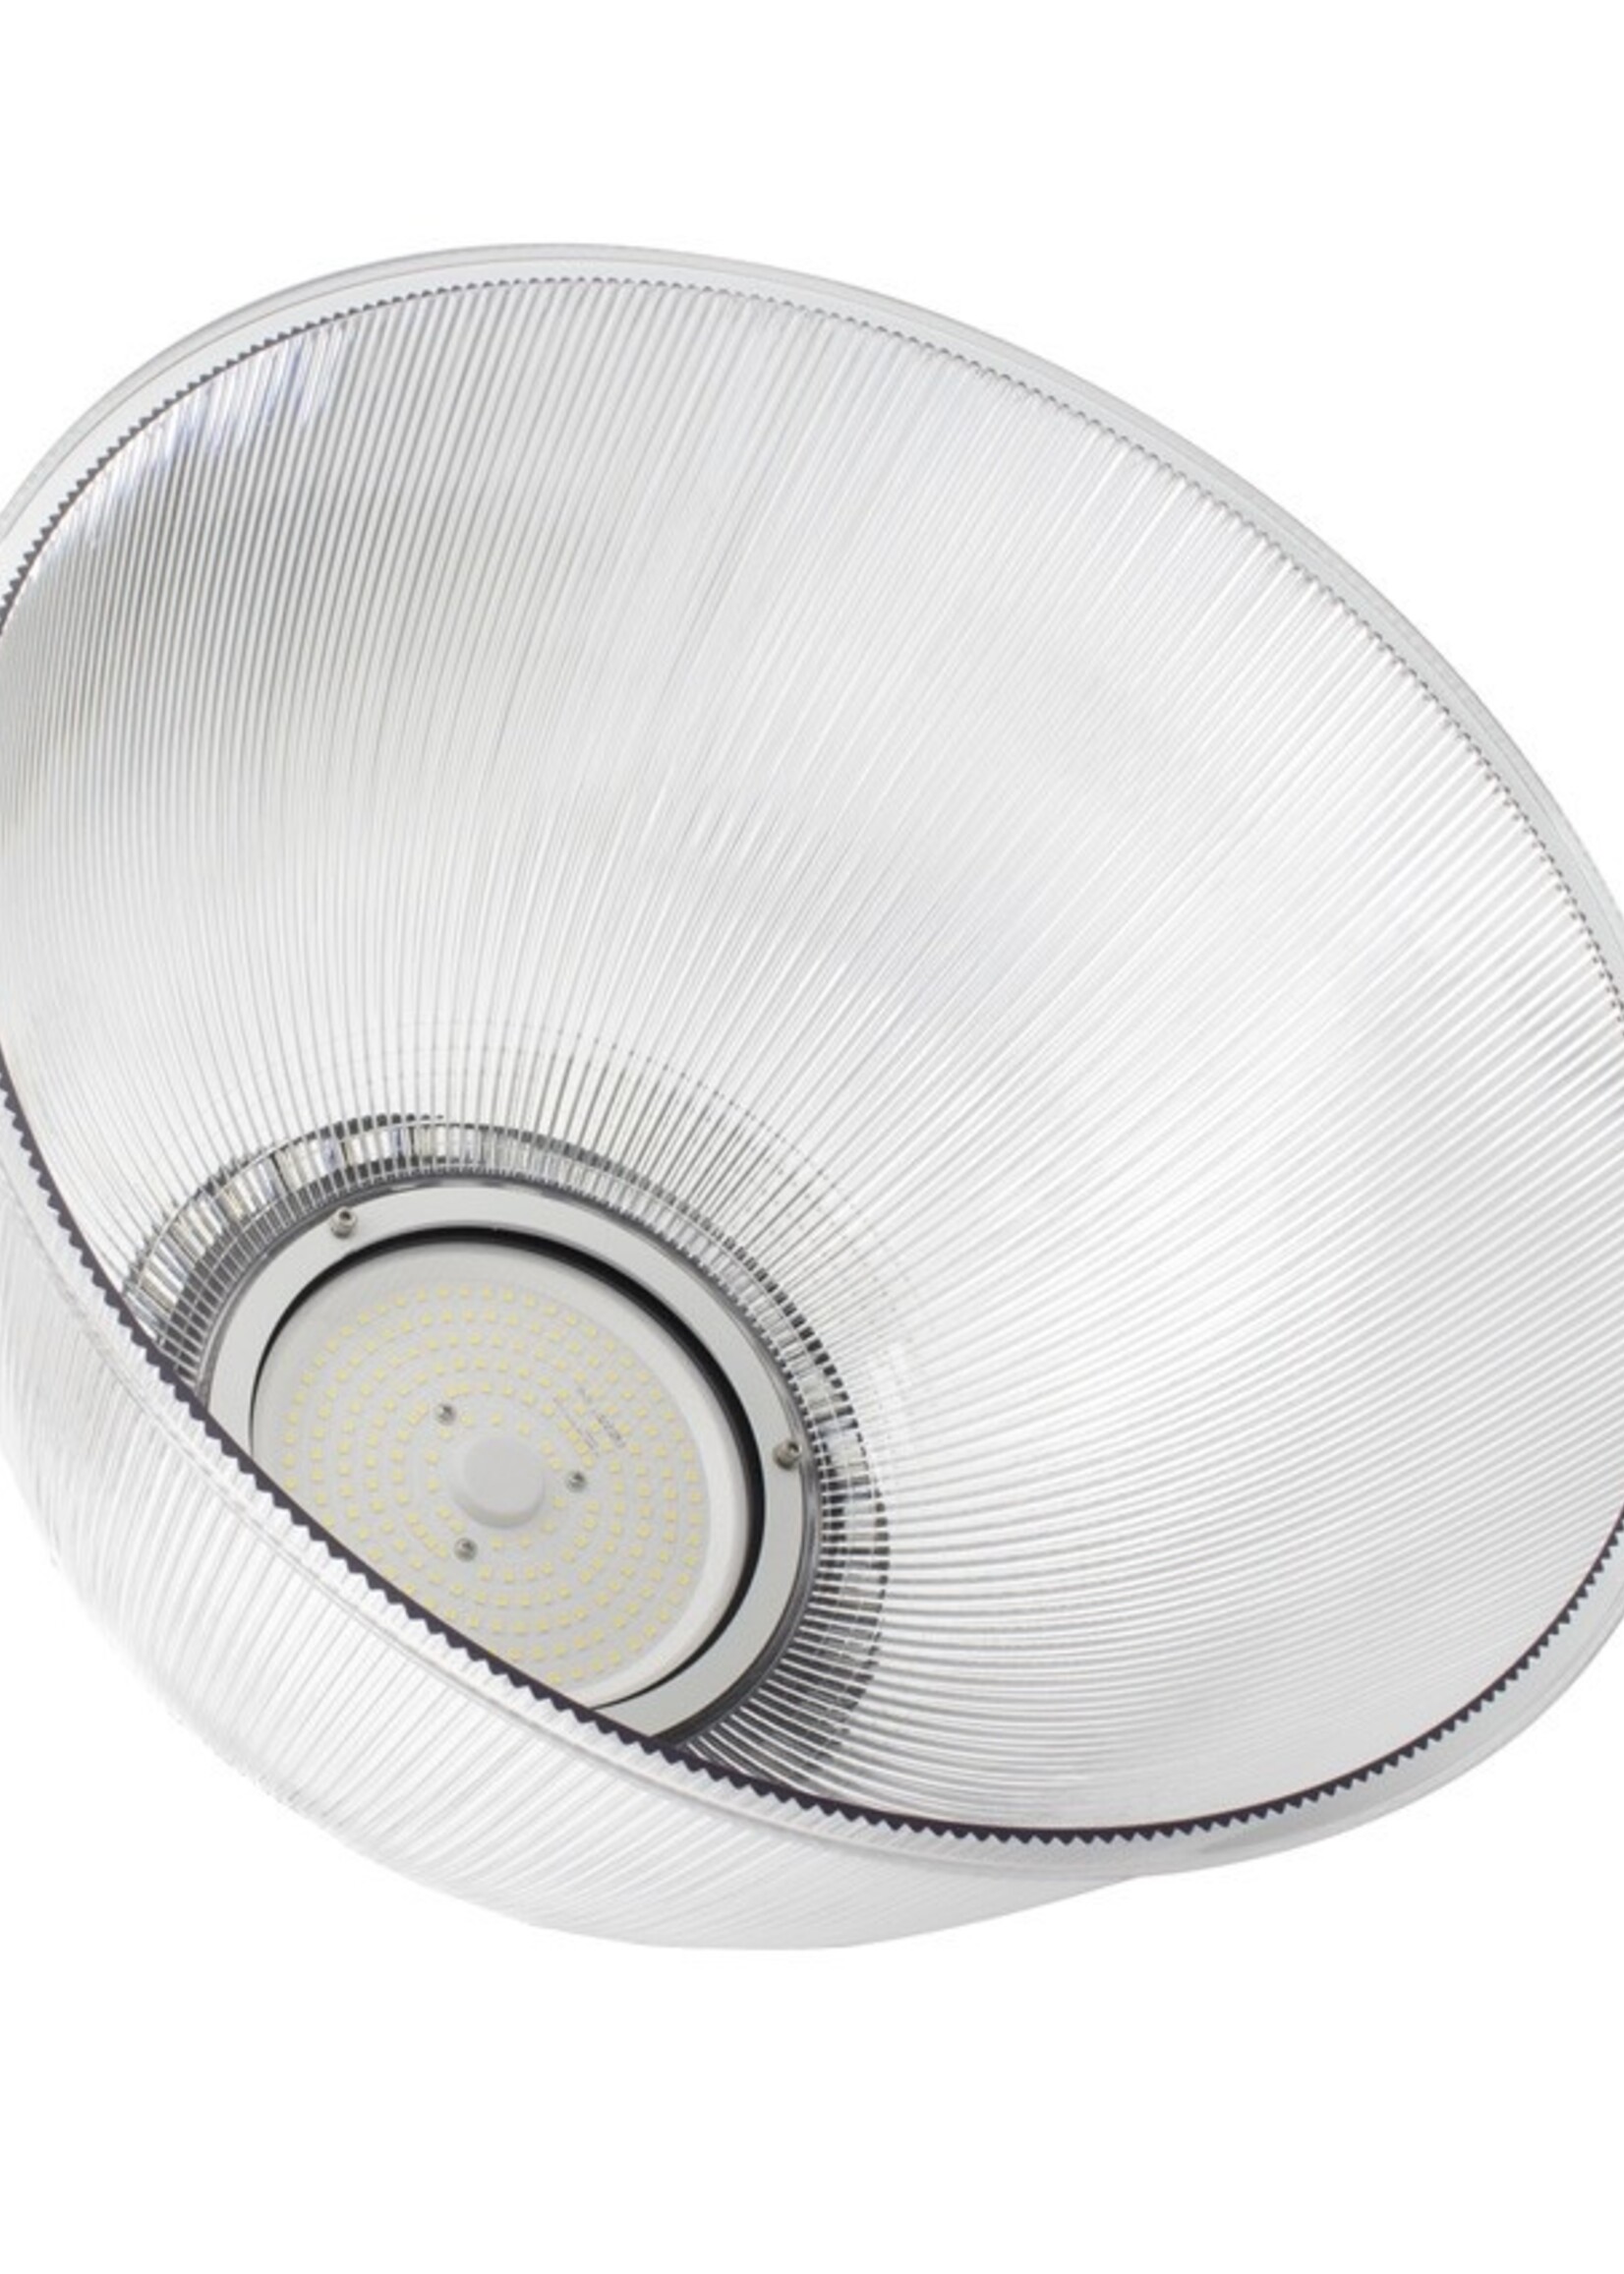 LEDWINKEL-Online LED UFO Highbay reflector hood for 150W 310x130mm